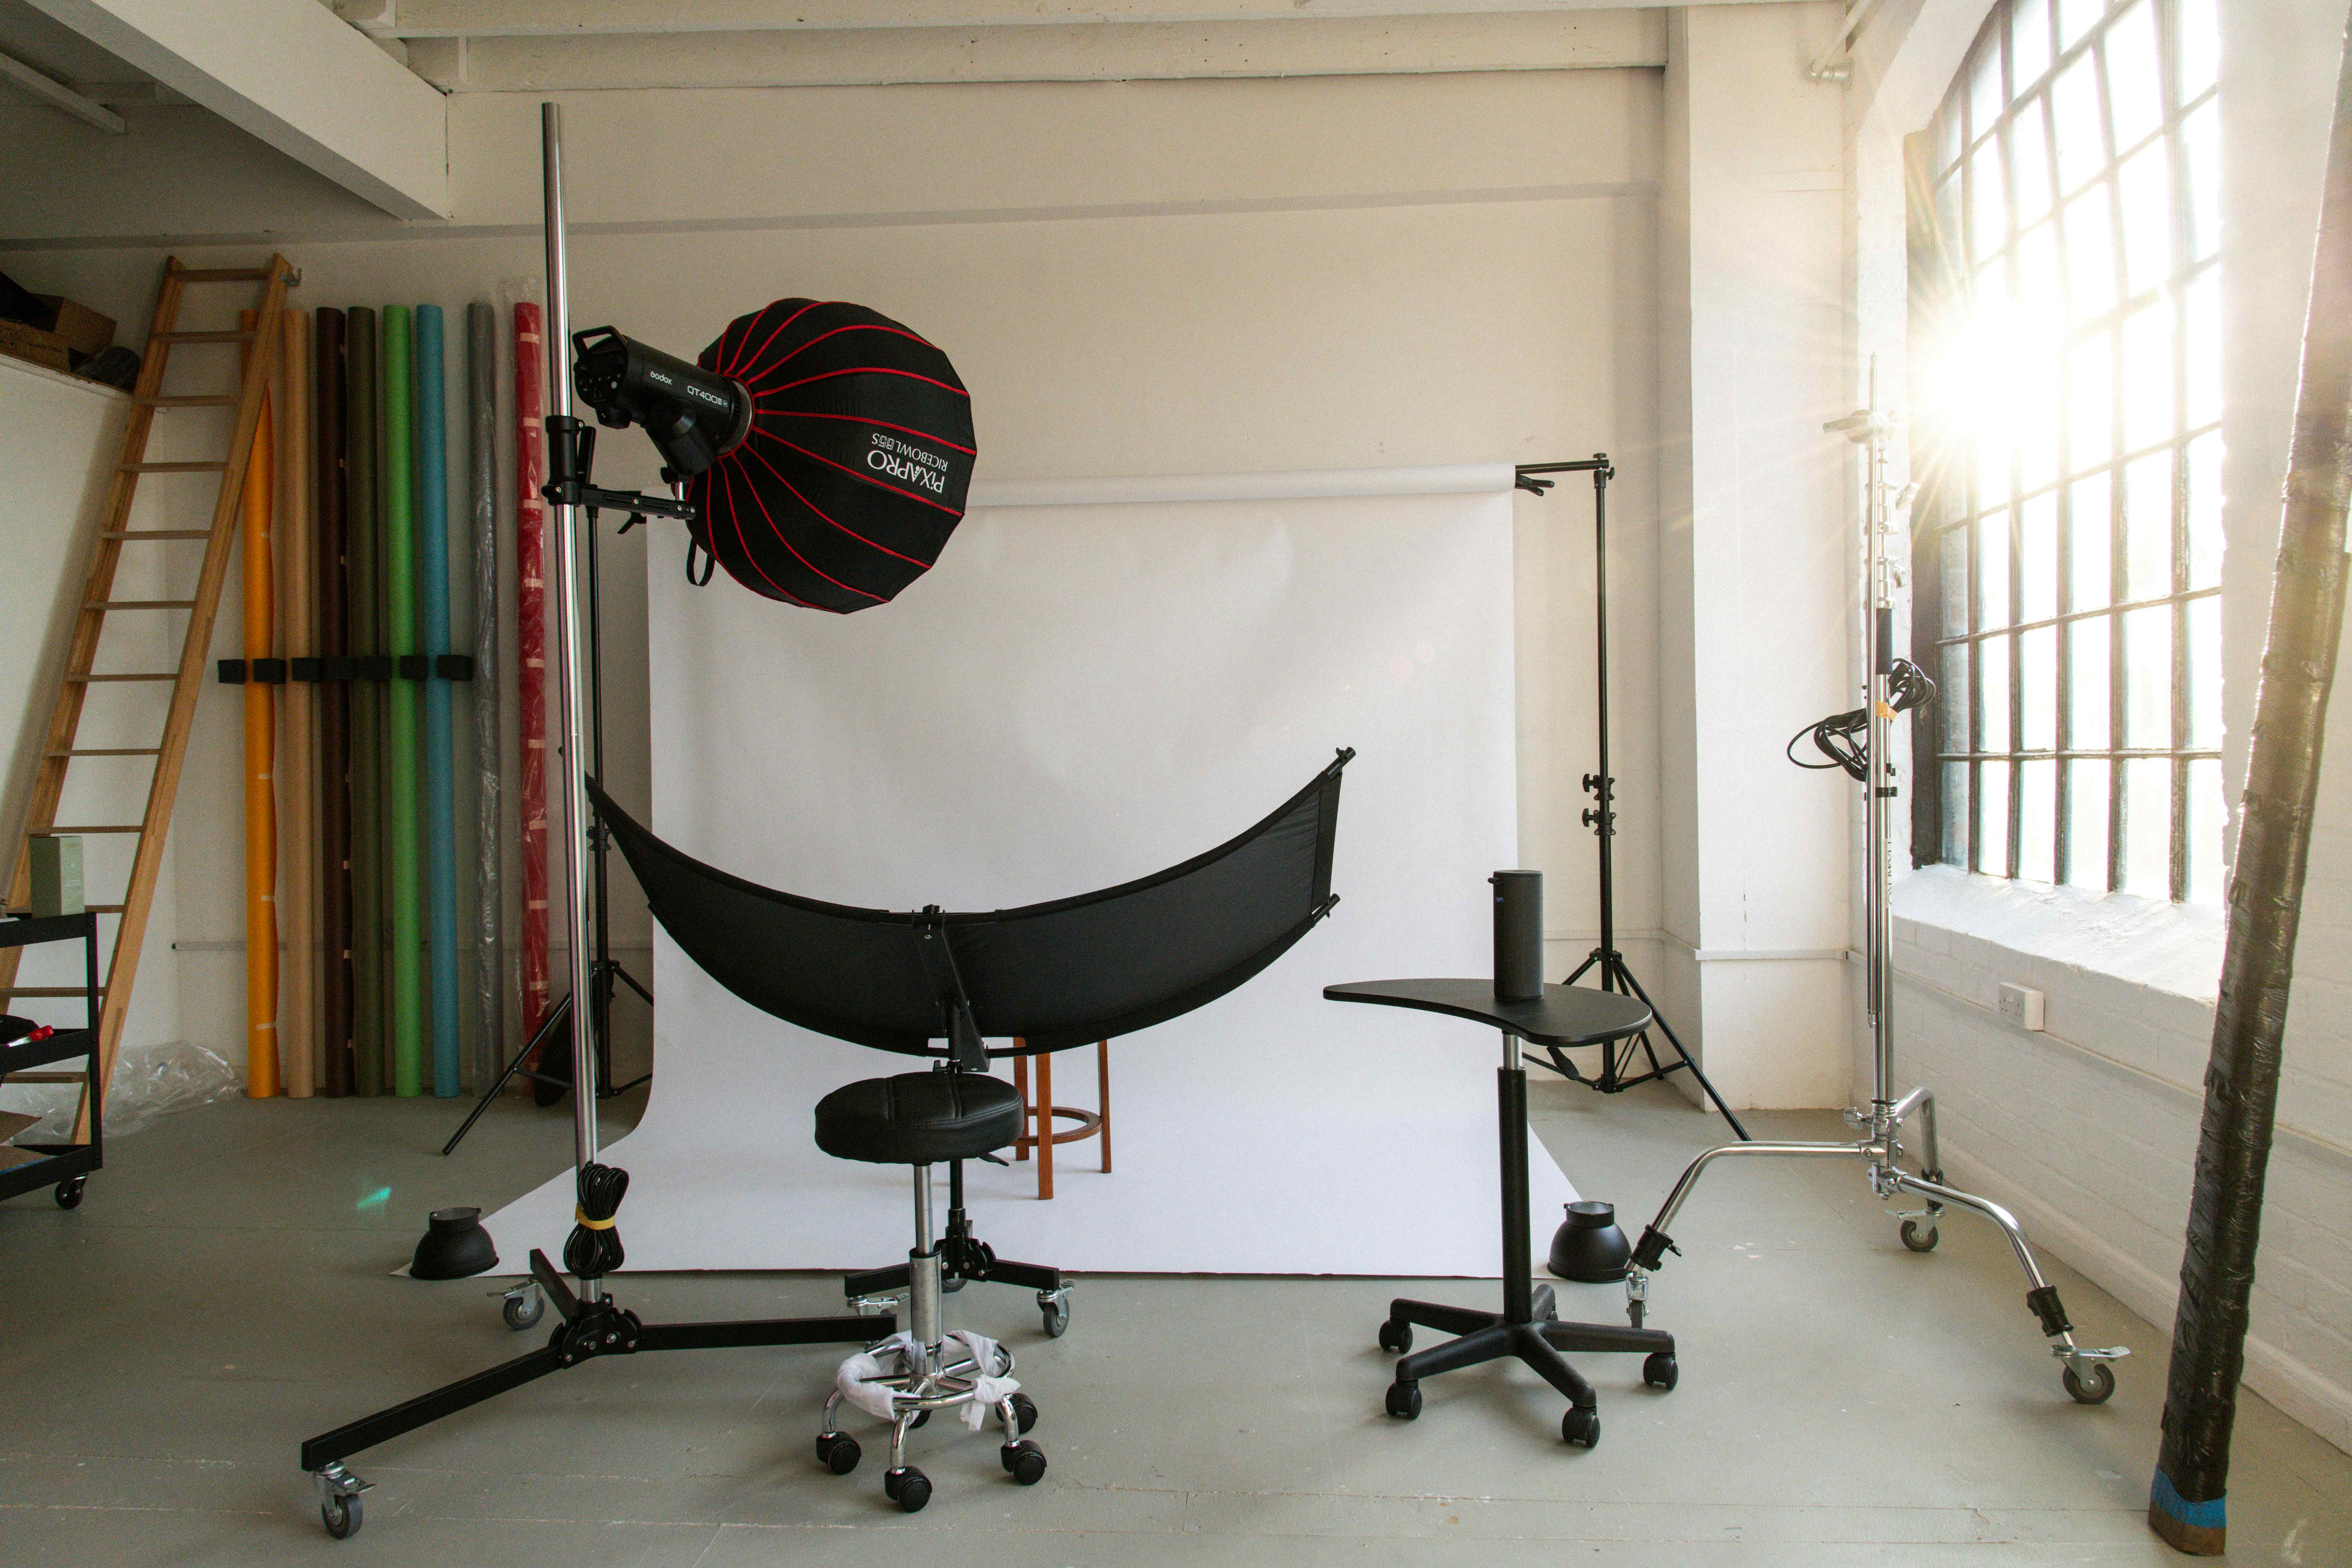 Multi-set Photography/Videography Studio in East London, Tiny Room Studios